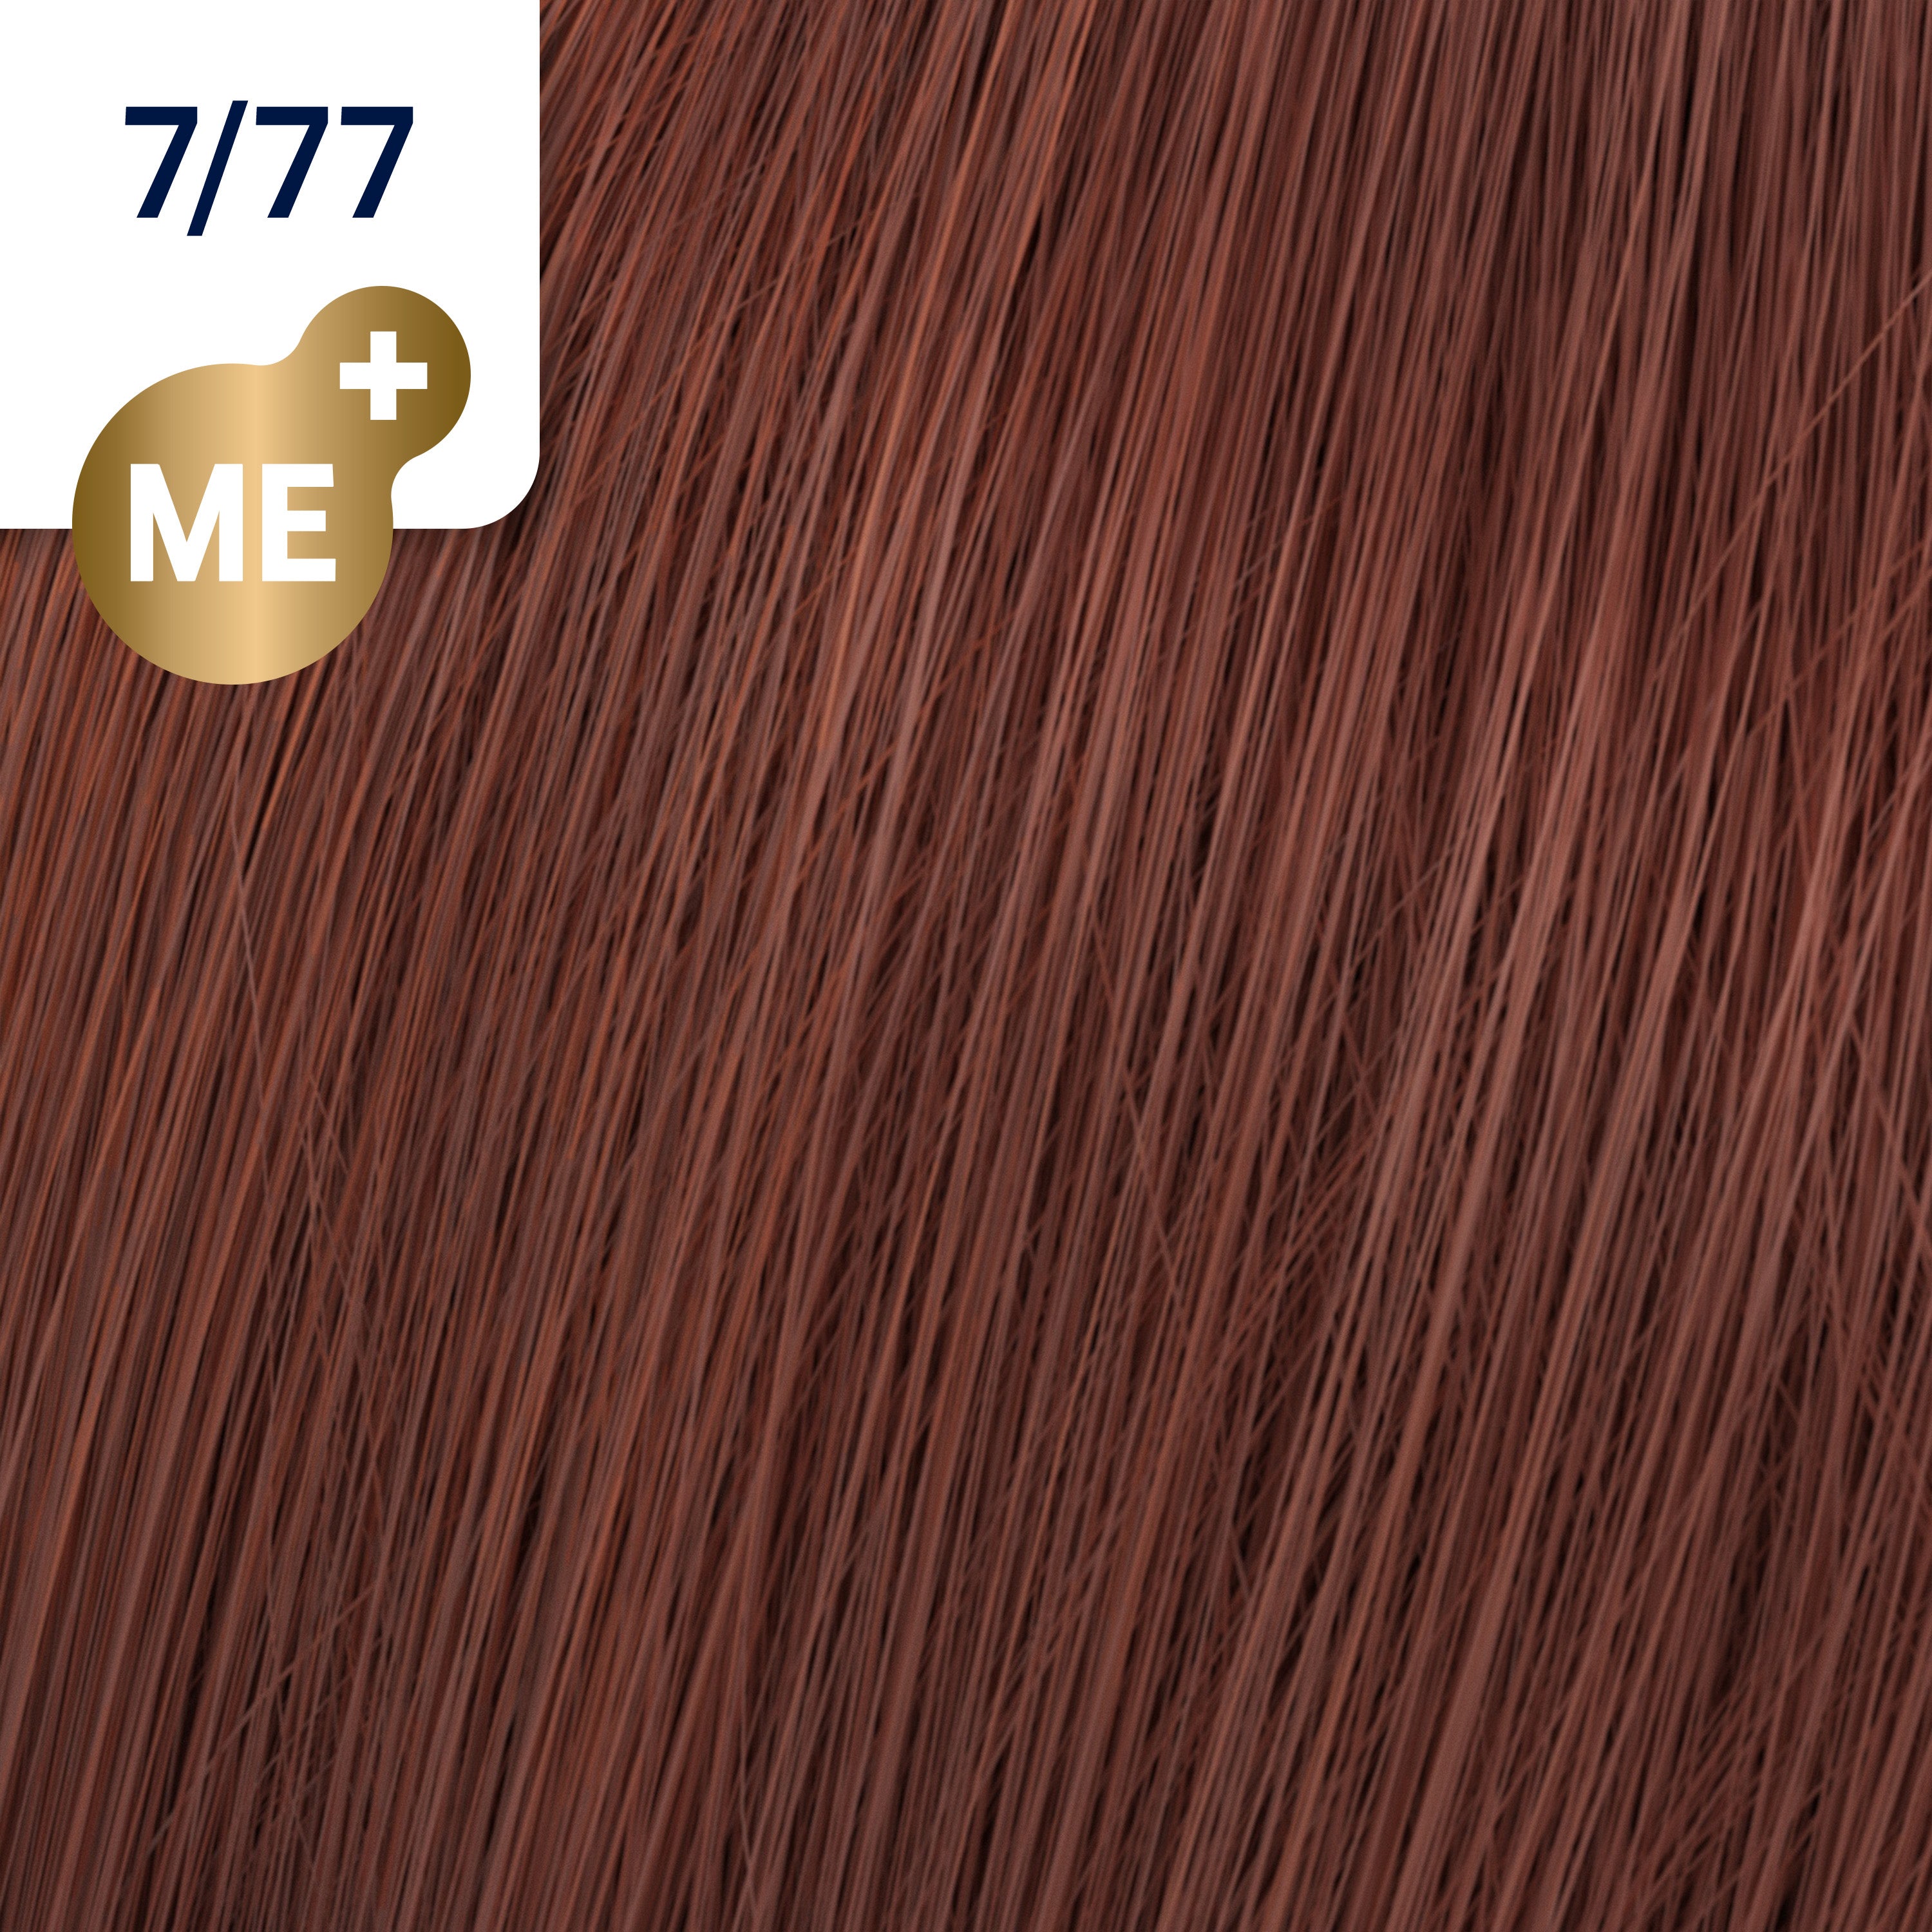 Wella Koleston Perfect Me+ Deep Browns 7/77 Medium Intense - Brunette Blonde